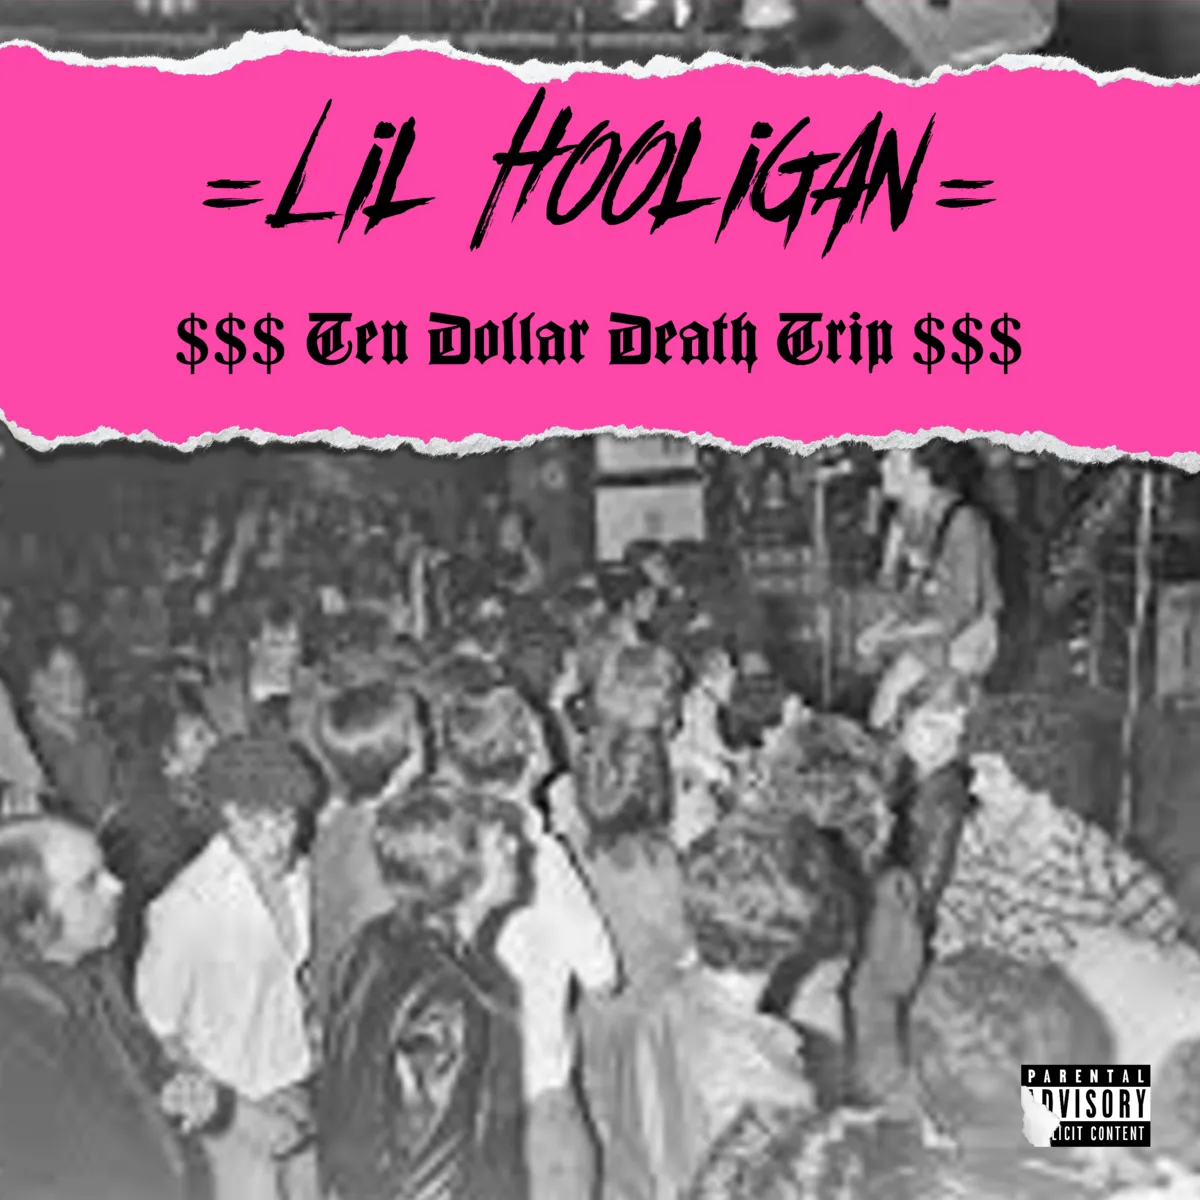 $$ Ten Dollar Death Trip $$ - Lil Hooligan. Coming Soon